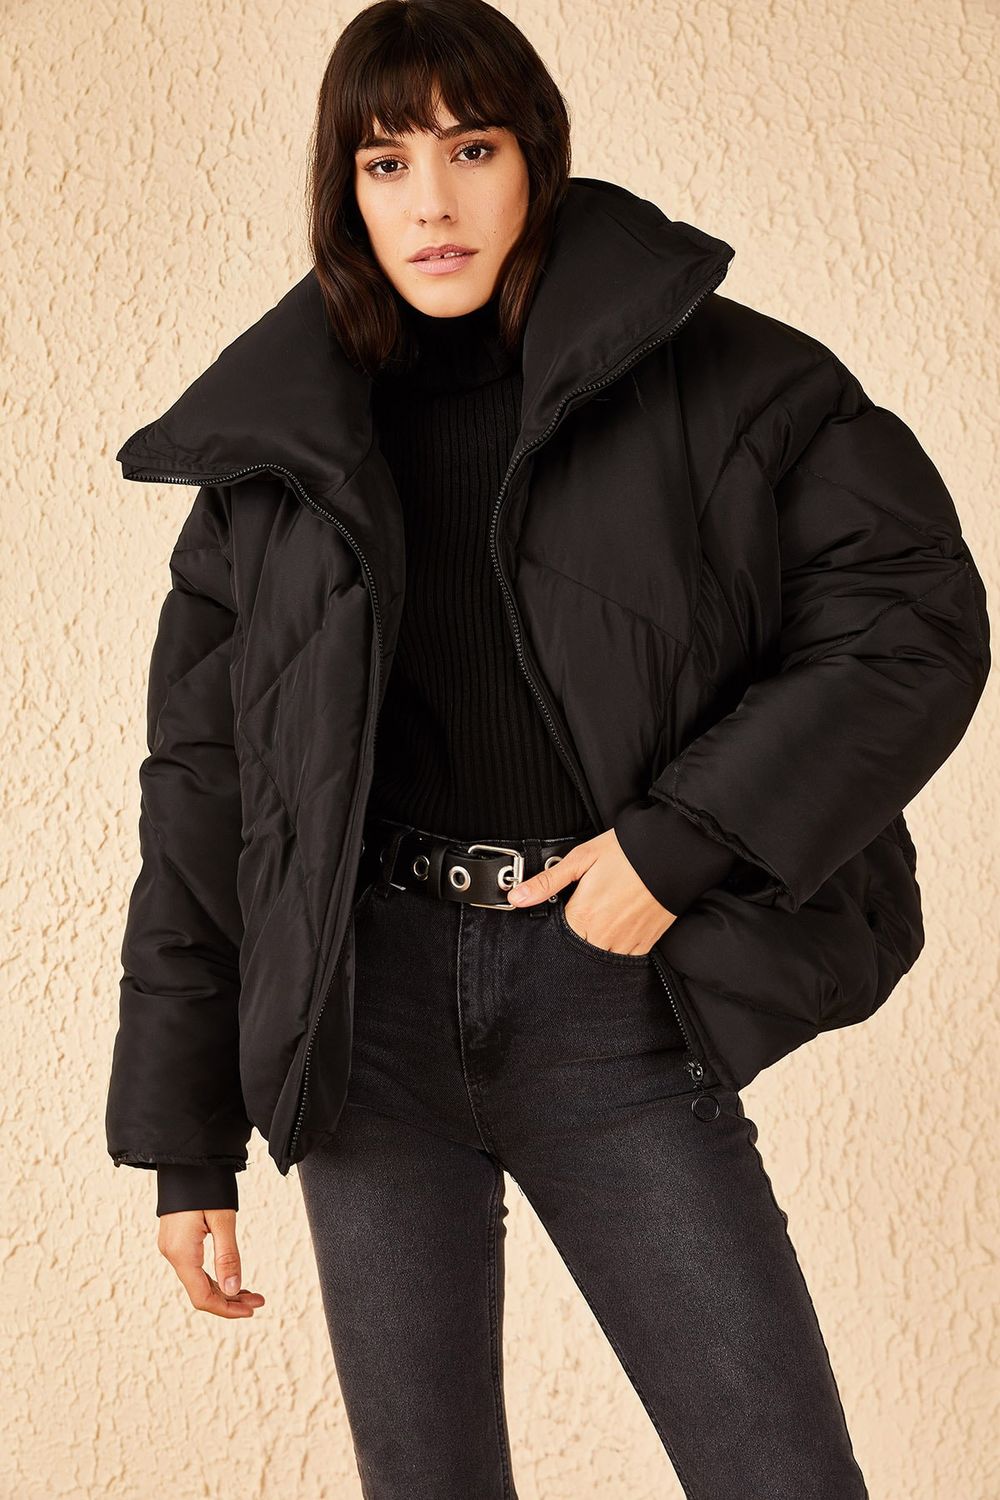 Closure London Womens Cropped Fur Hooded Puffer Jacket, Black / Light Fur